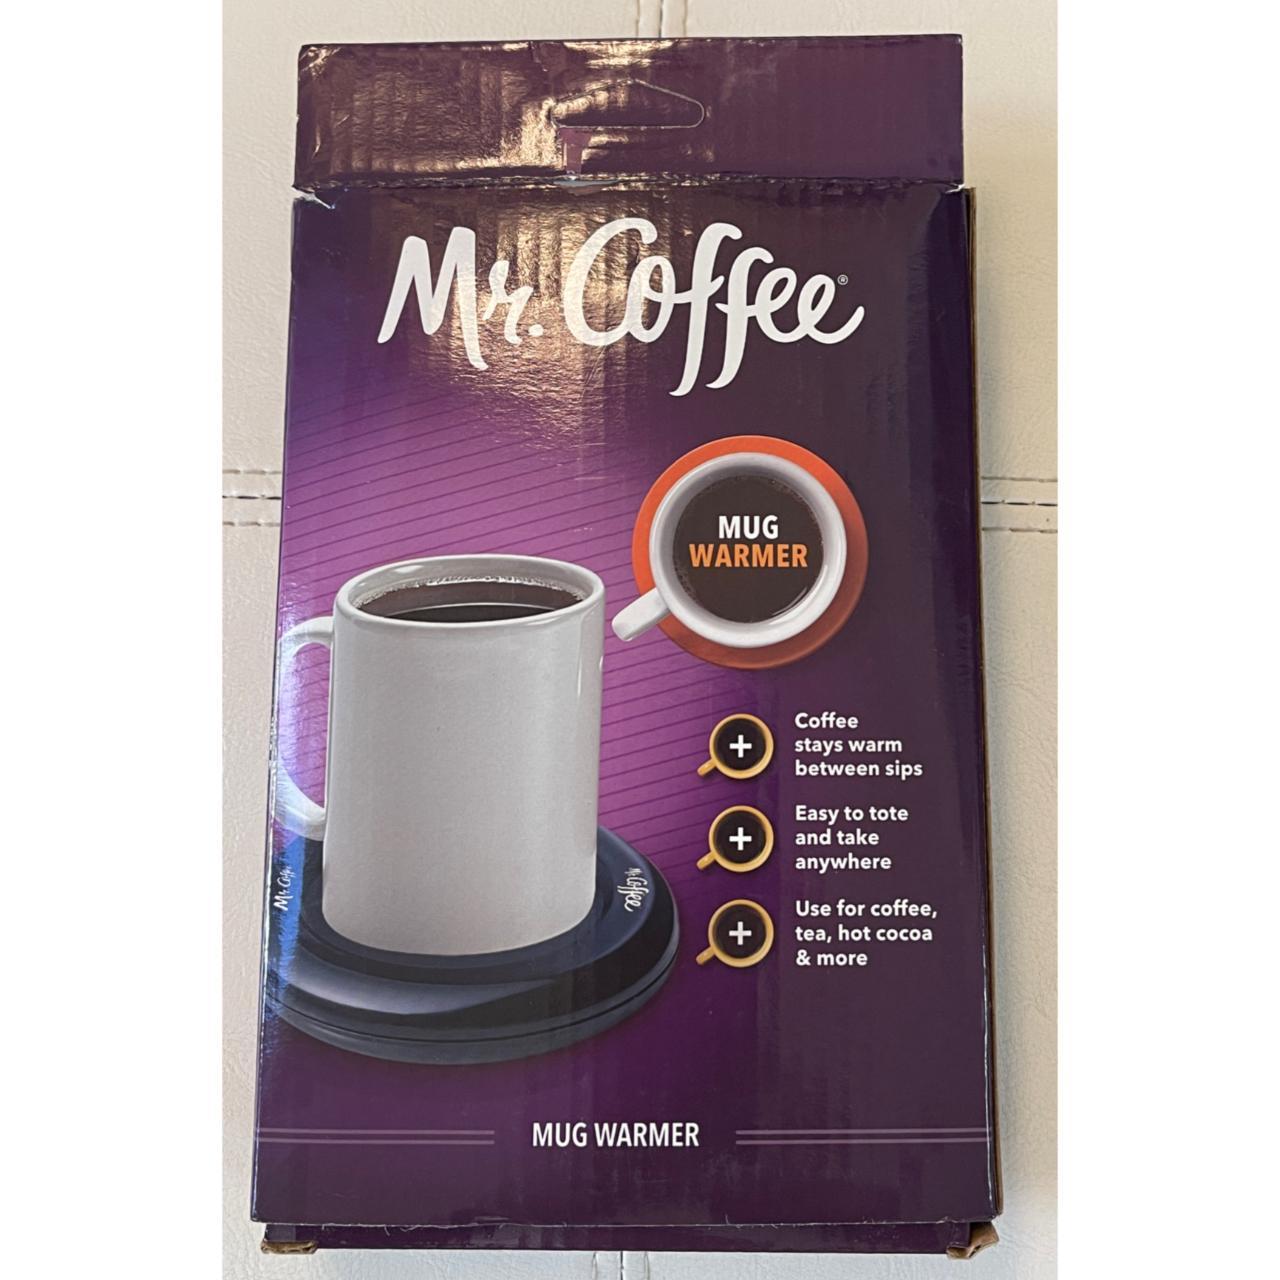 Mr. Coffee Mug Warmer at